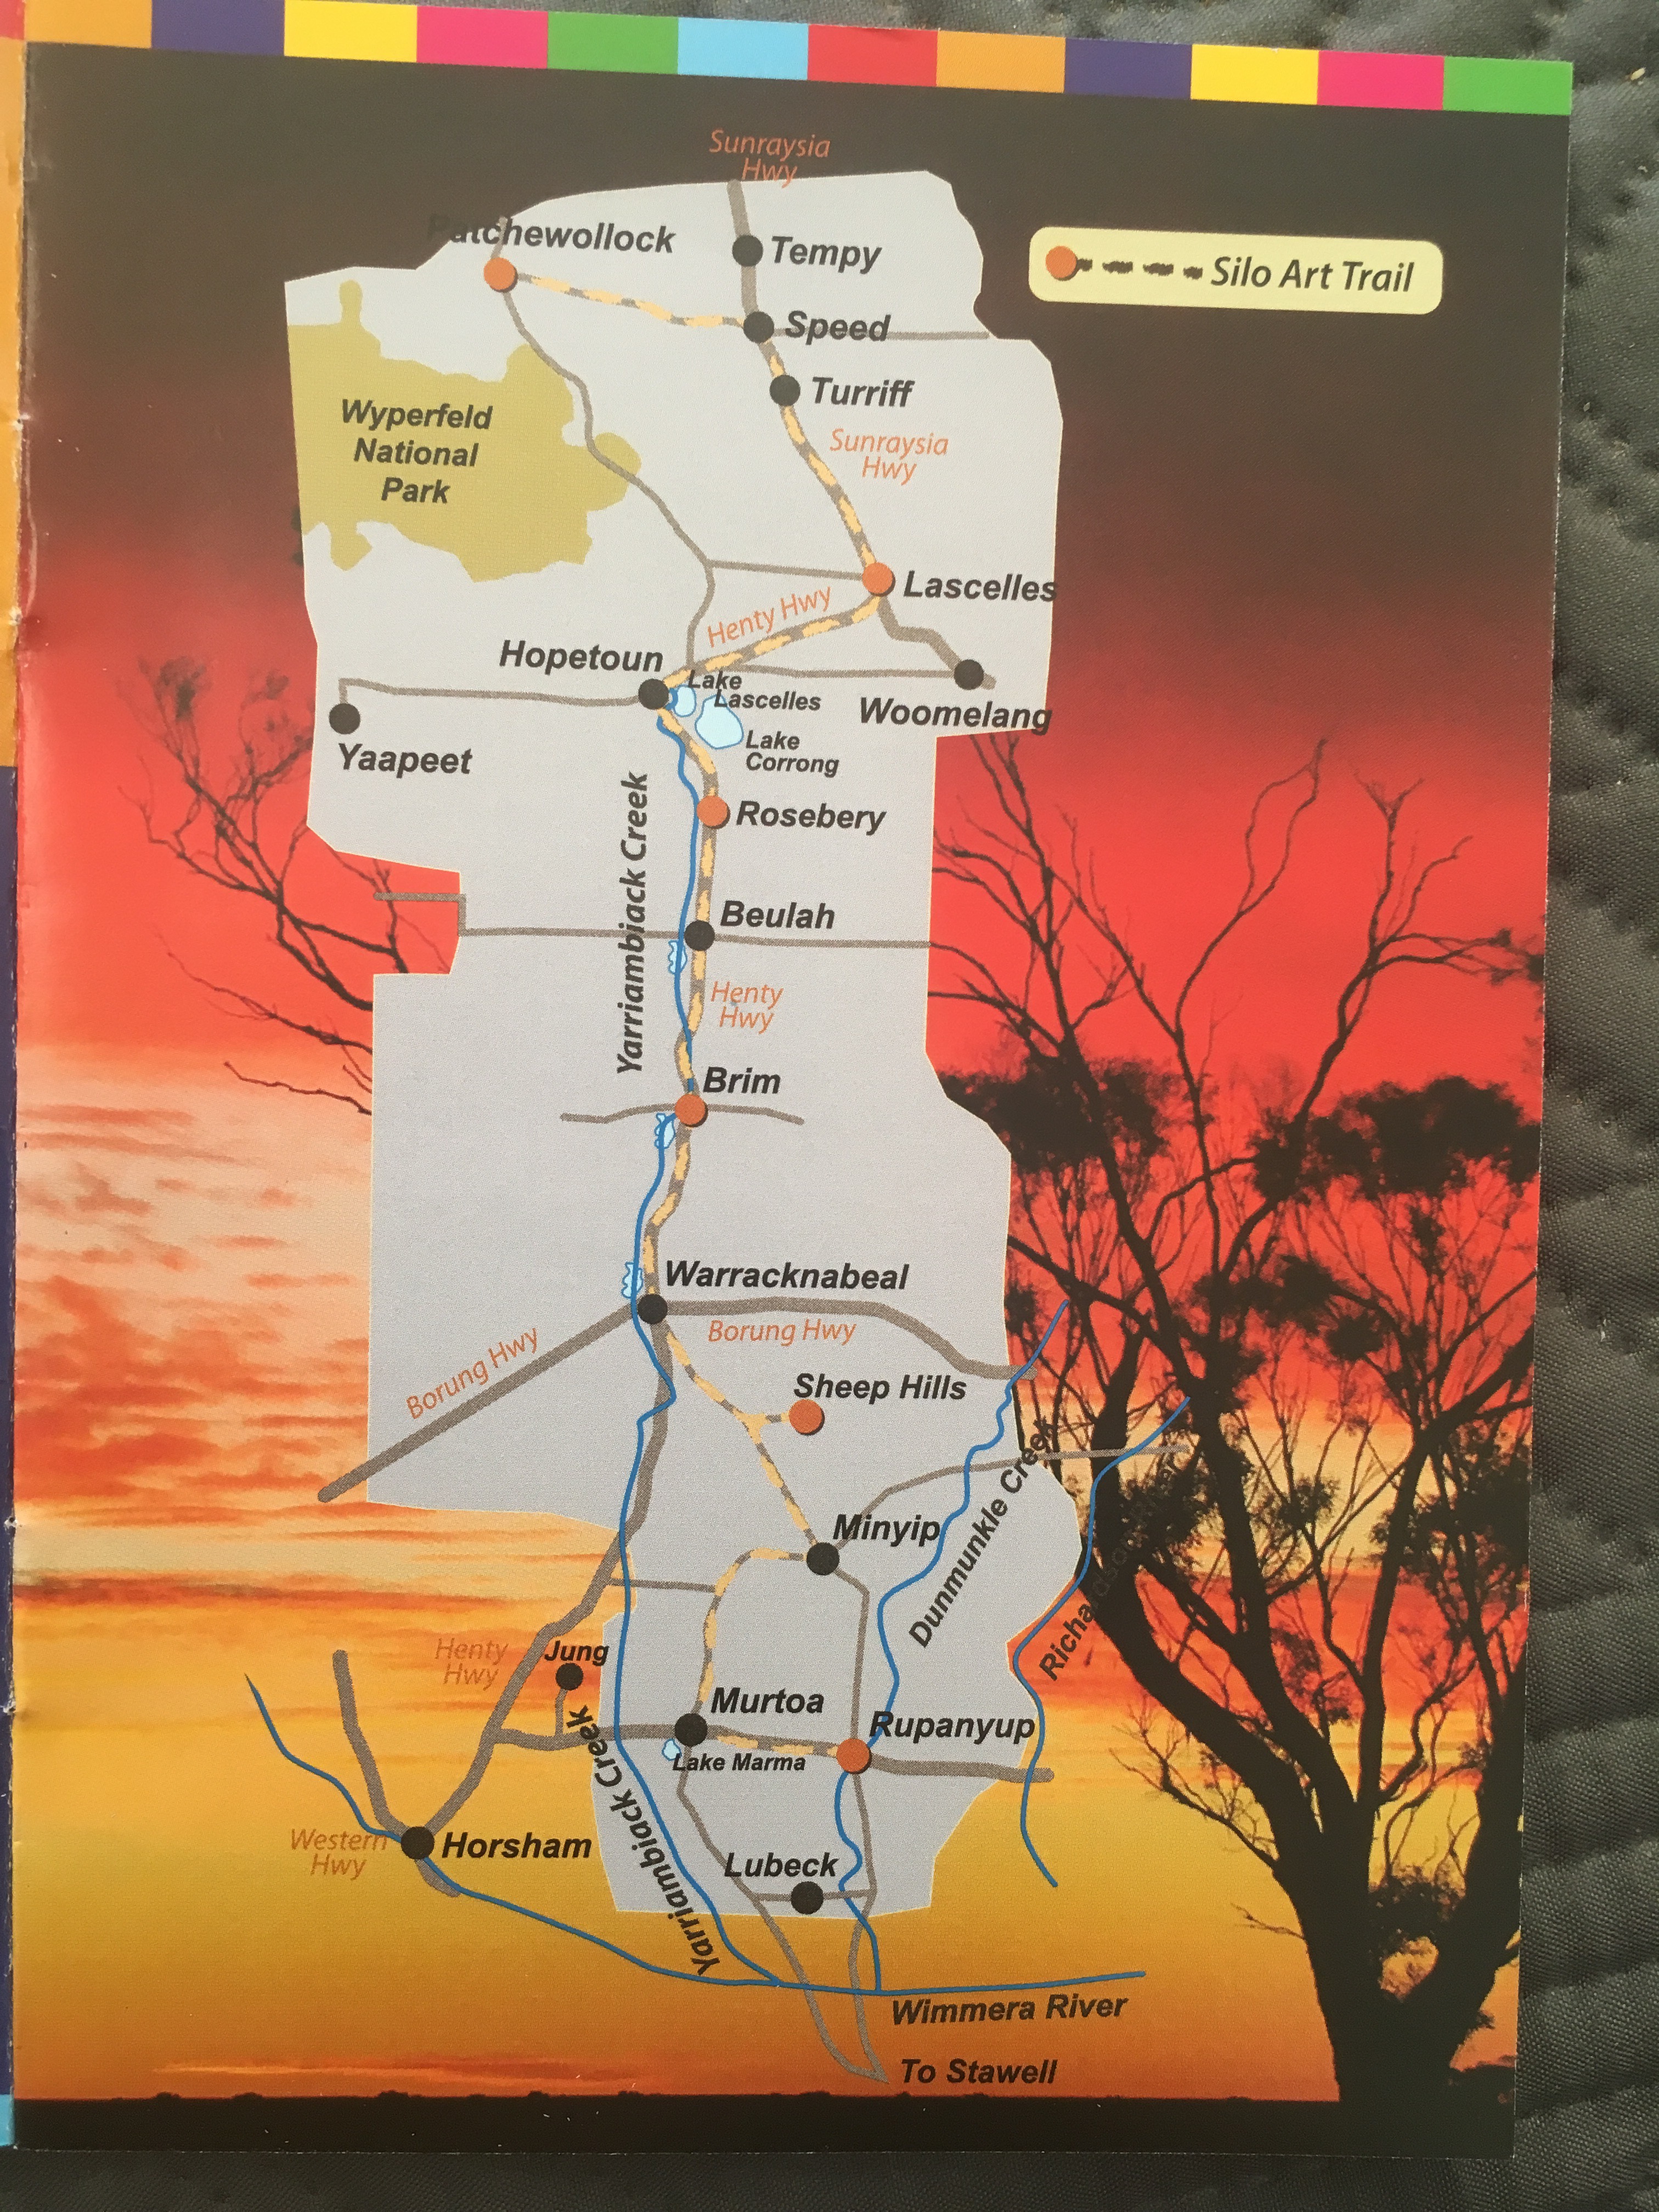 Map of Western Victoria Silo Art Trail